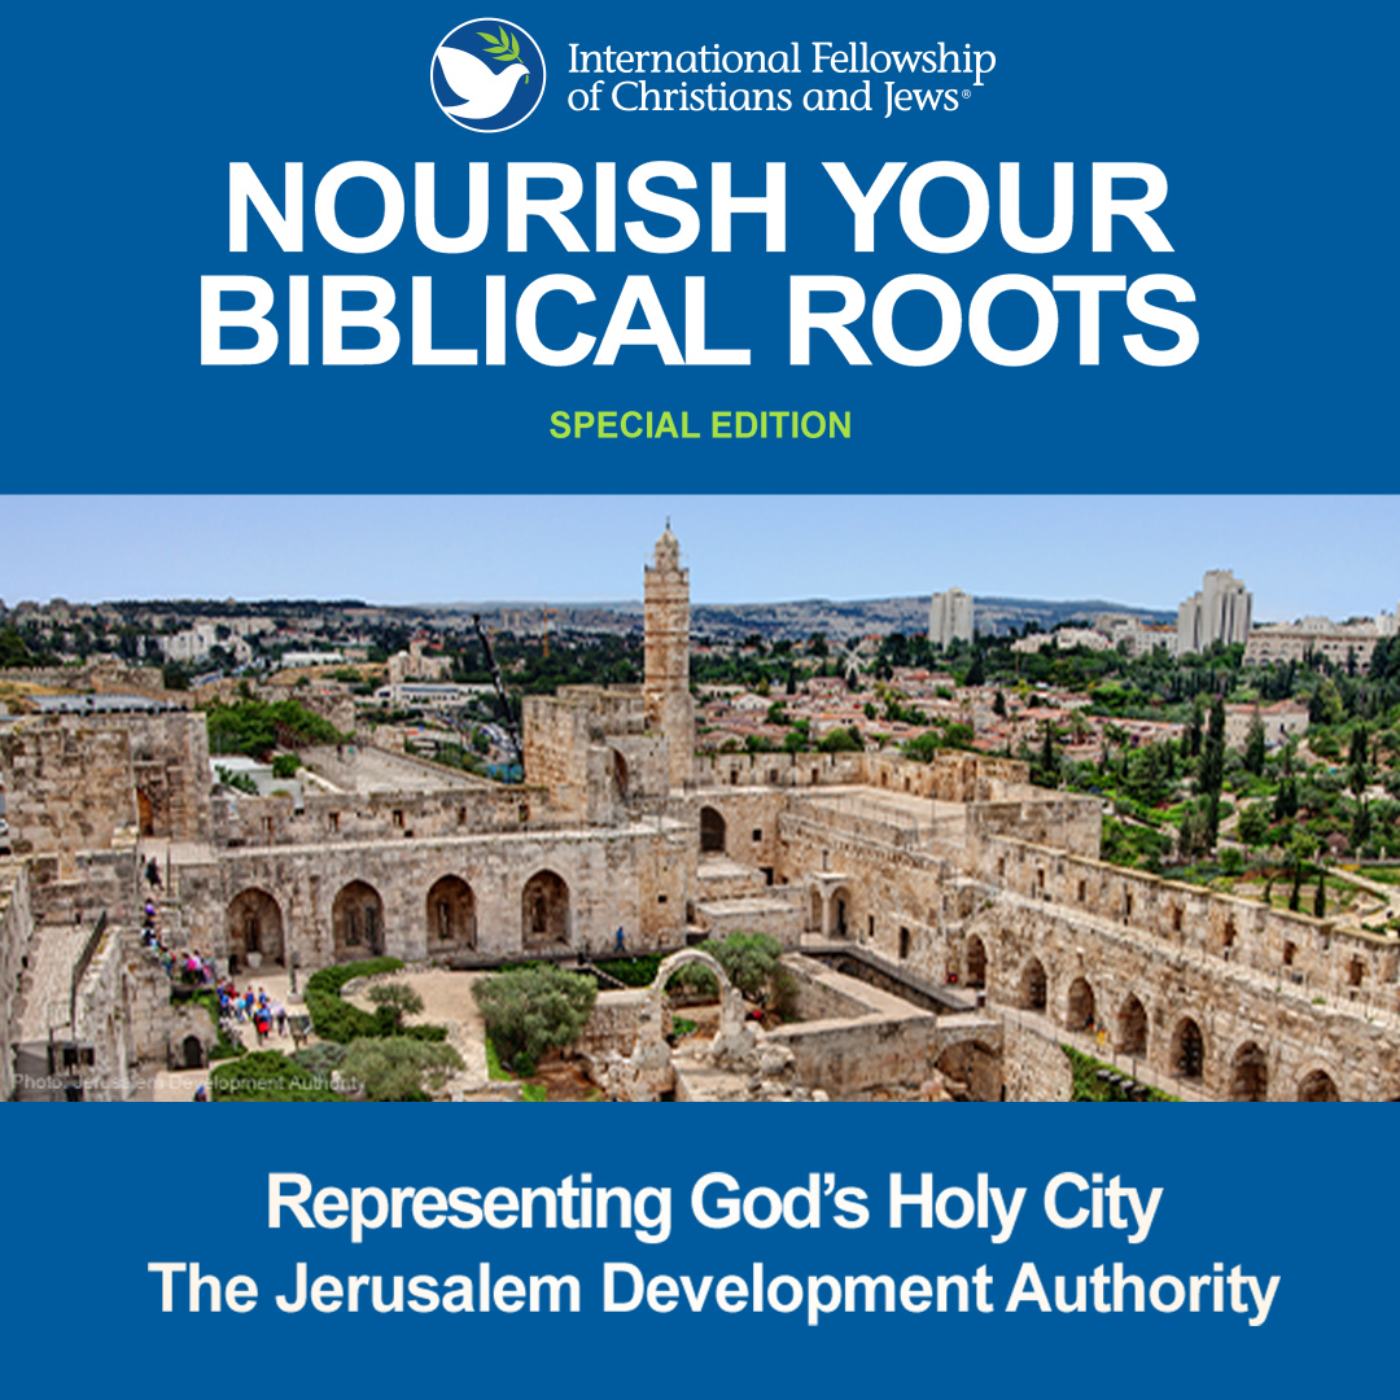 Representing God's Holy City—The Jerusalem Development Authority